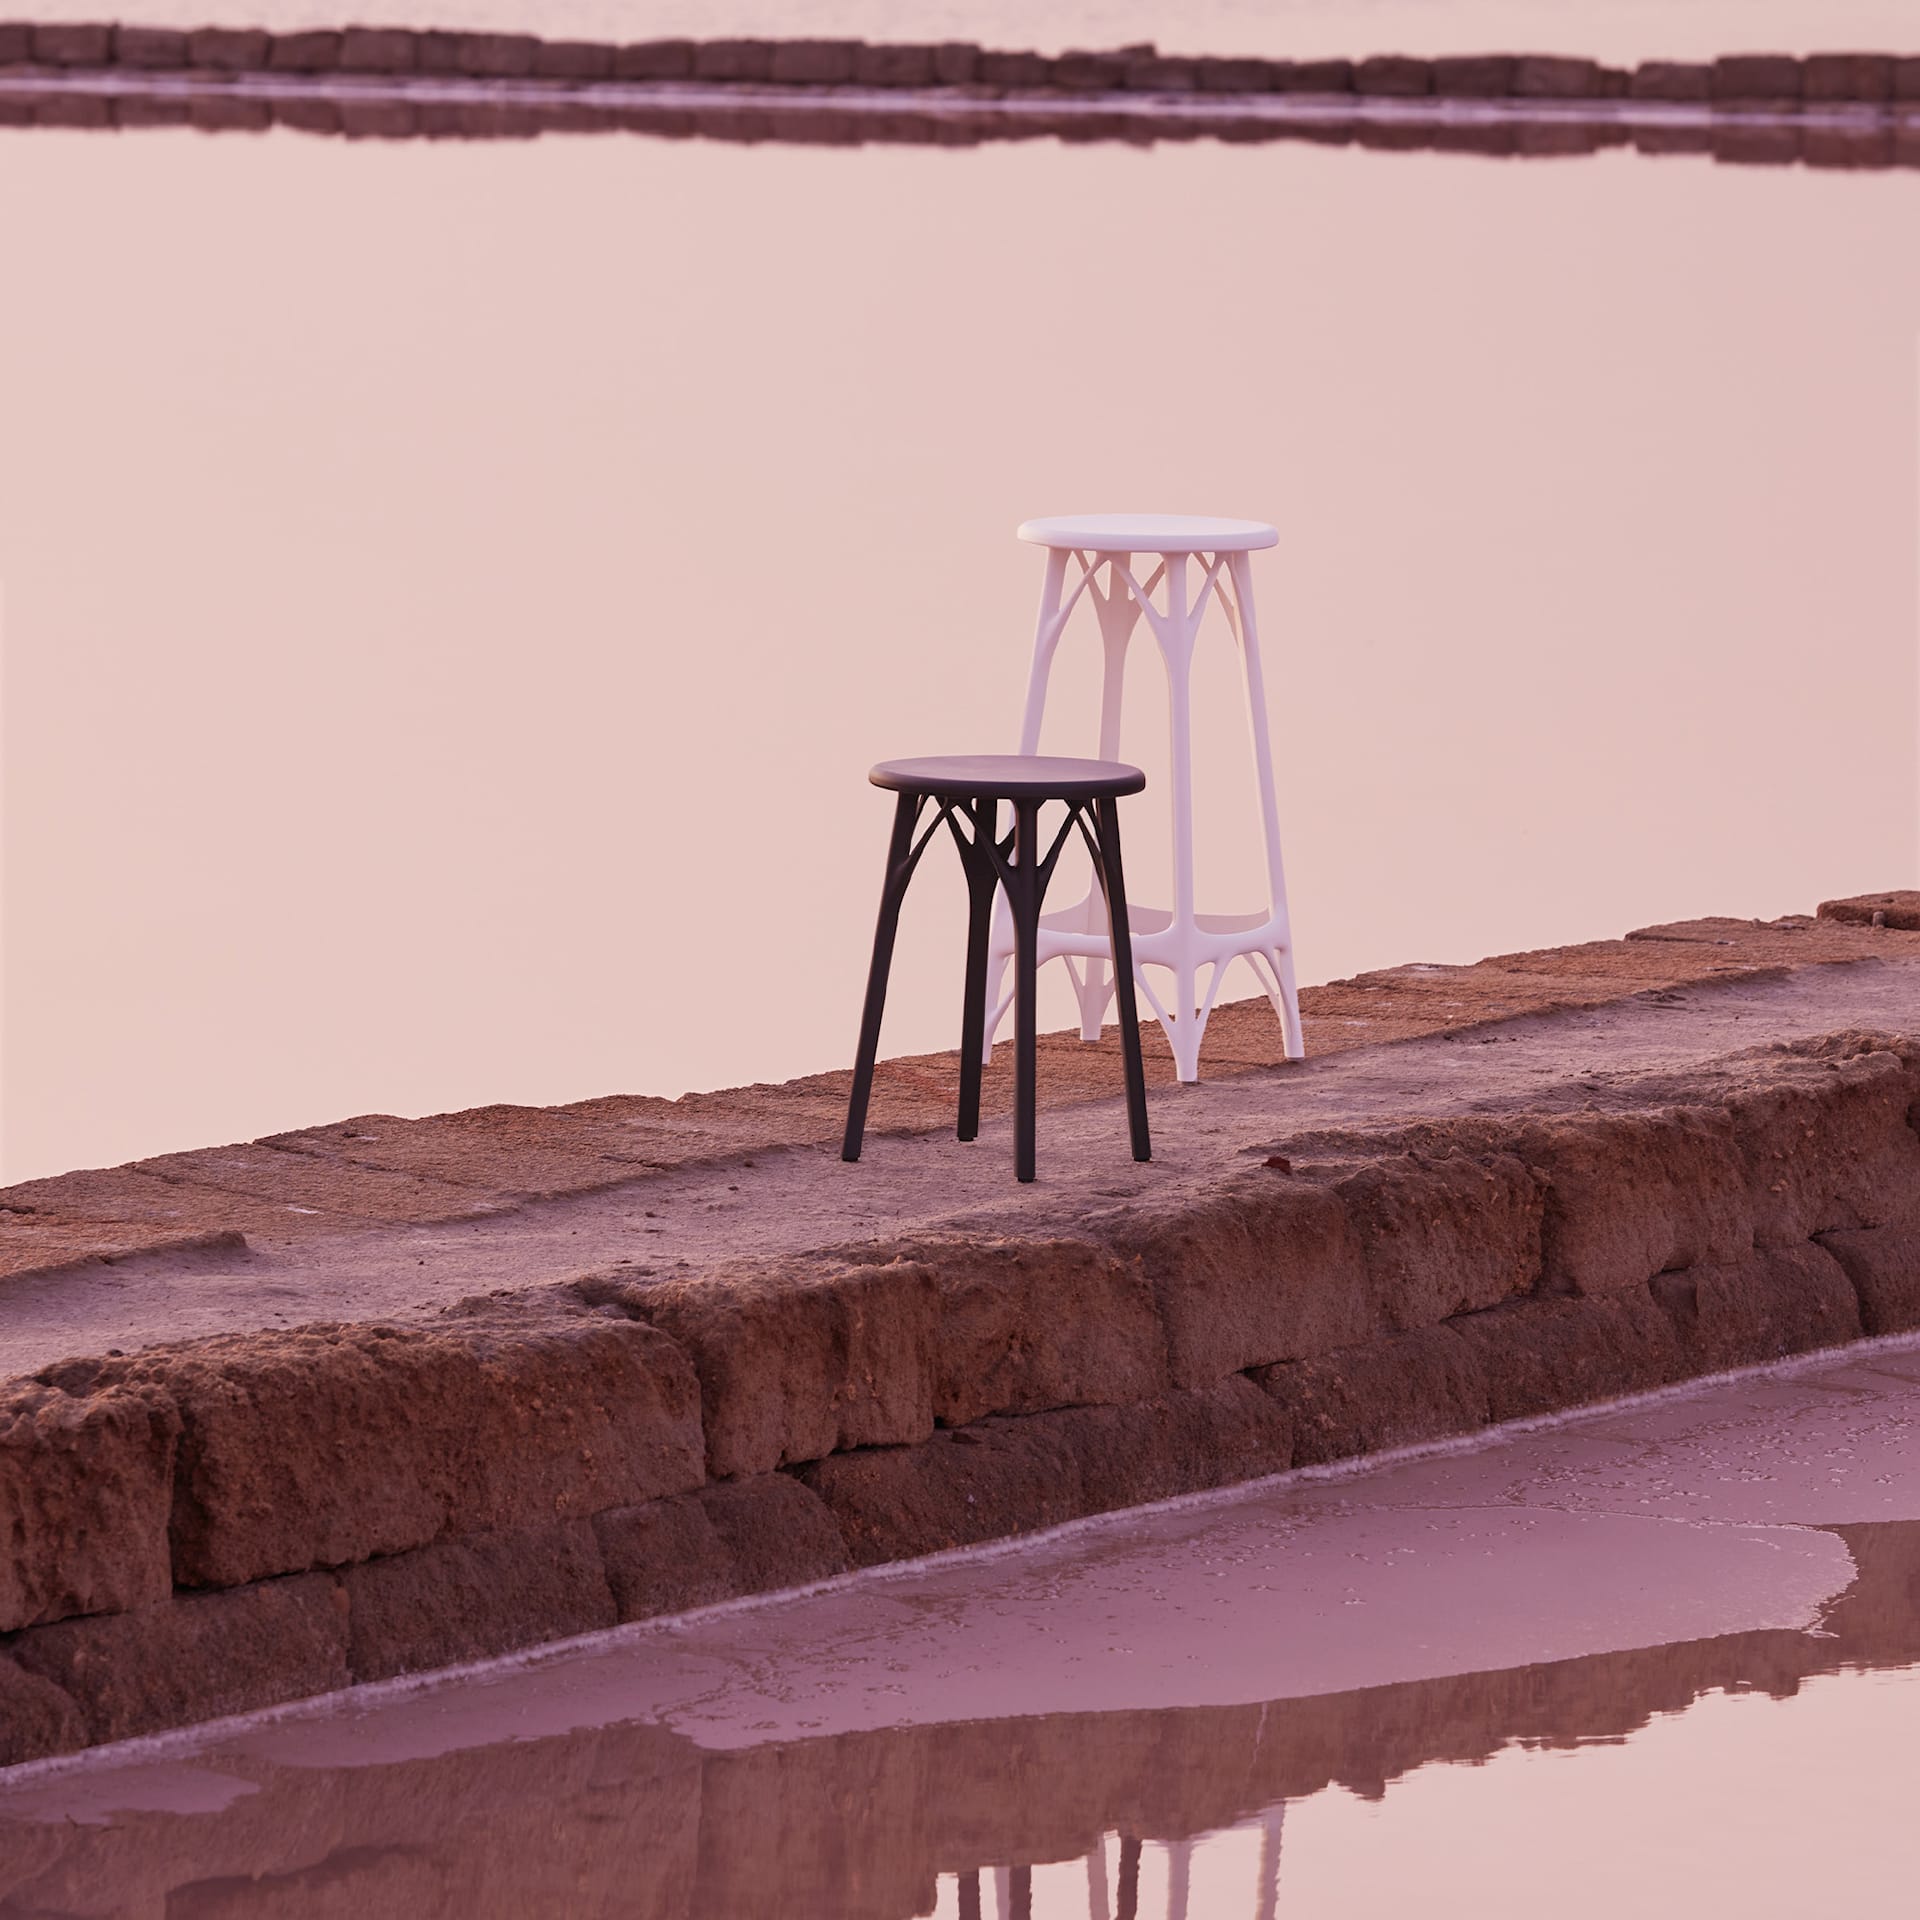 A.I. Stool Light 65 cm - Kartell - Philippe Starck - NO GA